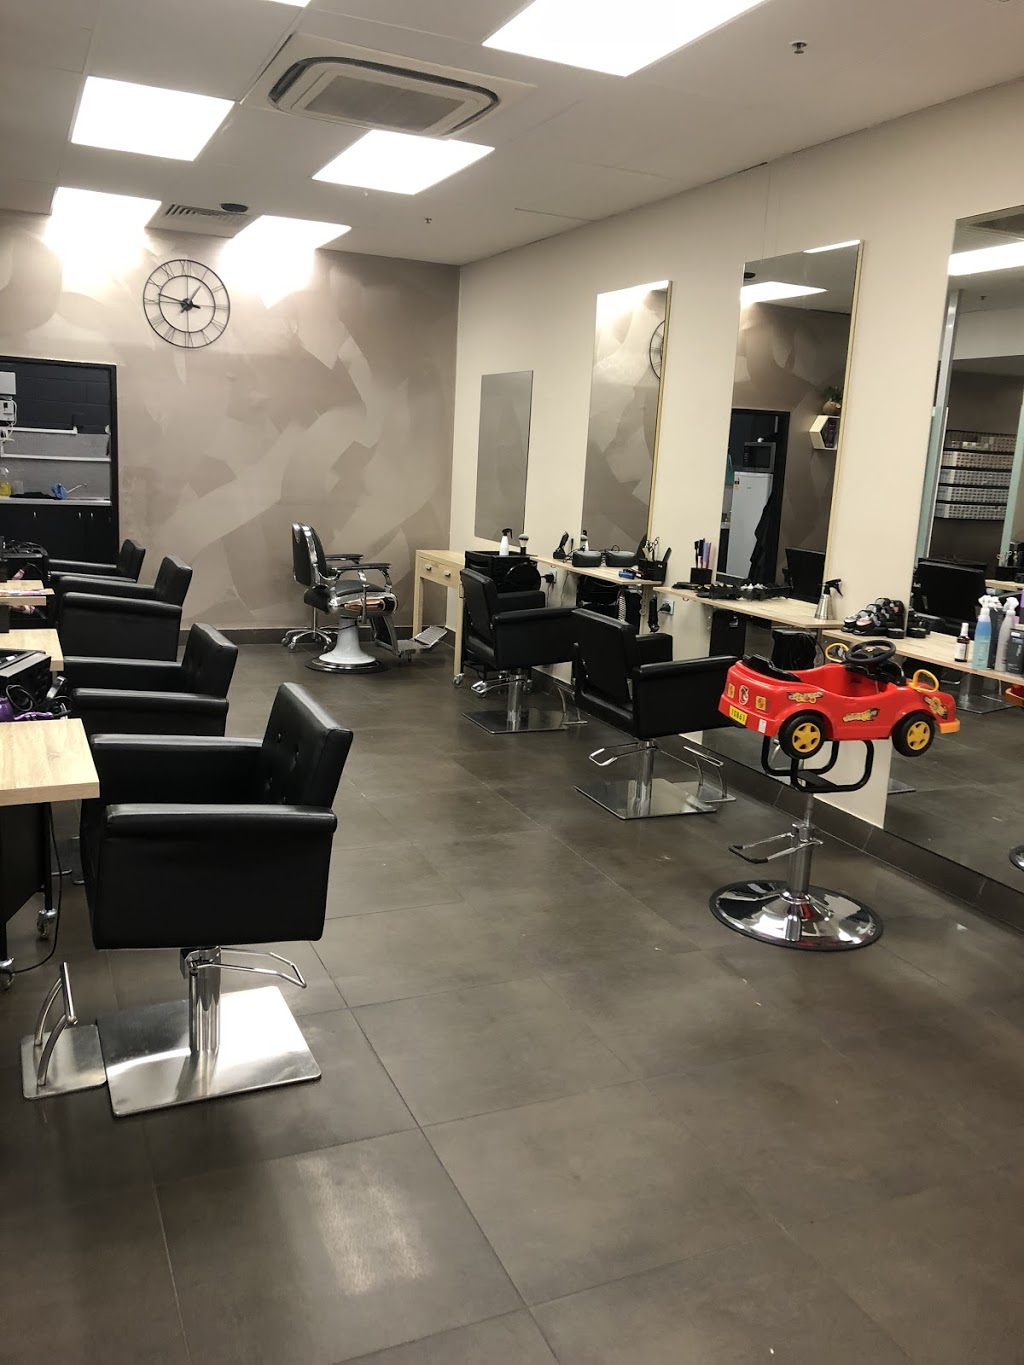 Headquarters Hair Studio NT | hair care | 1 Links Rd, Darwin City NT 0812, Australia | 0889288220 OR +61 8 8928 8220